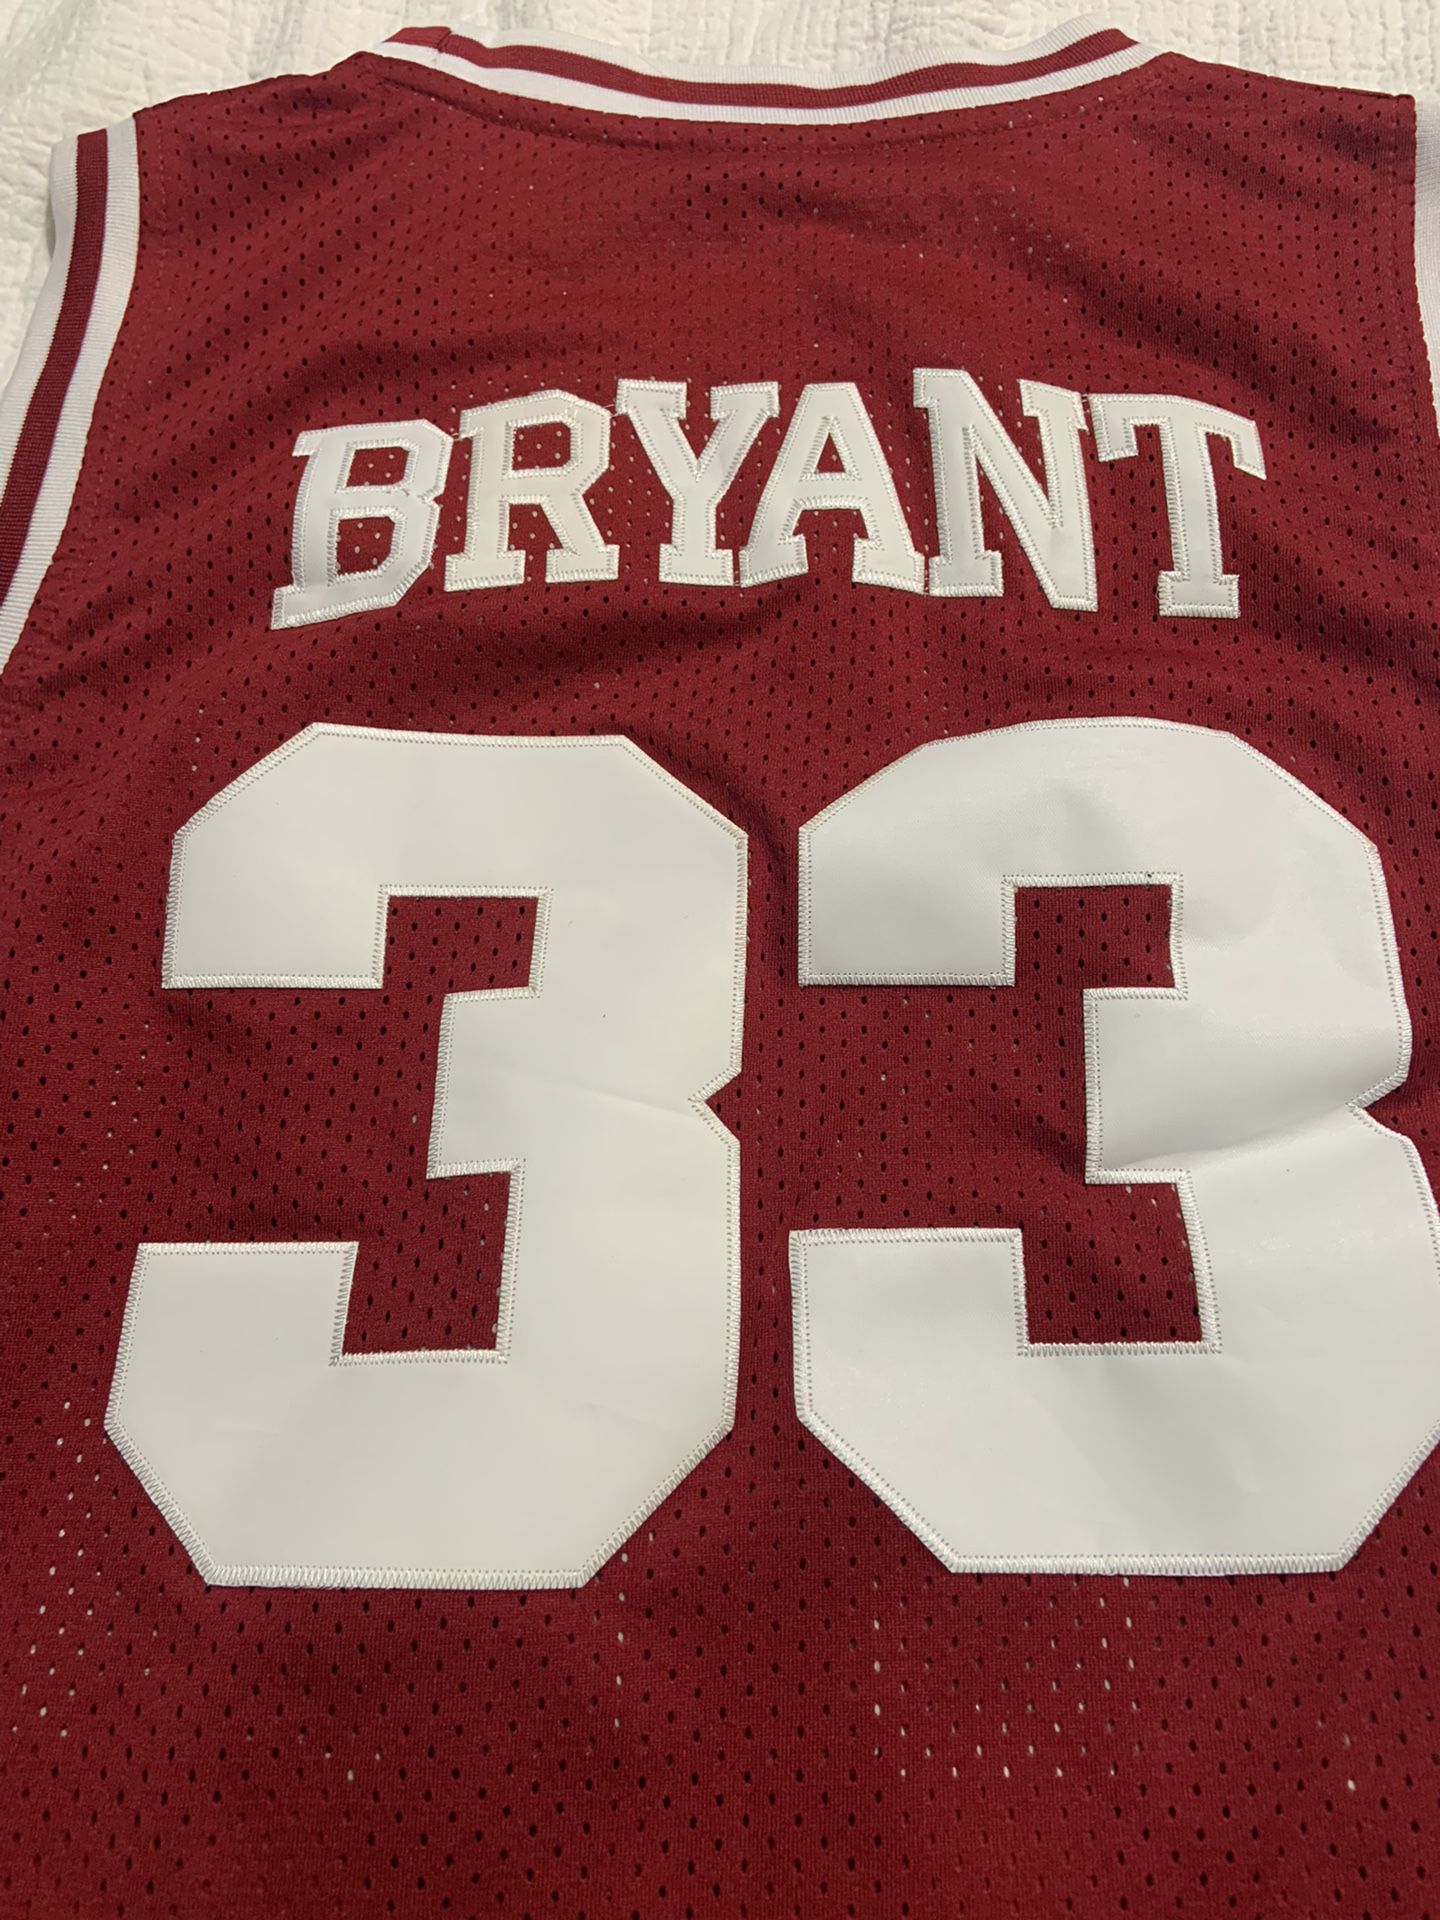 Vintage Kobe Bryant Jersey for Sale in Mesa, AZ - OfferUp